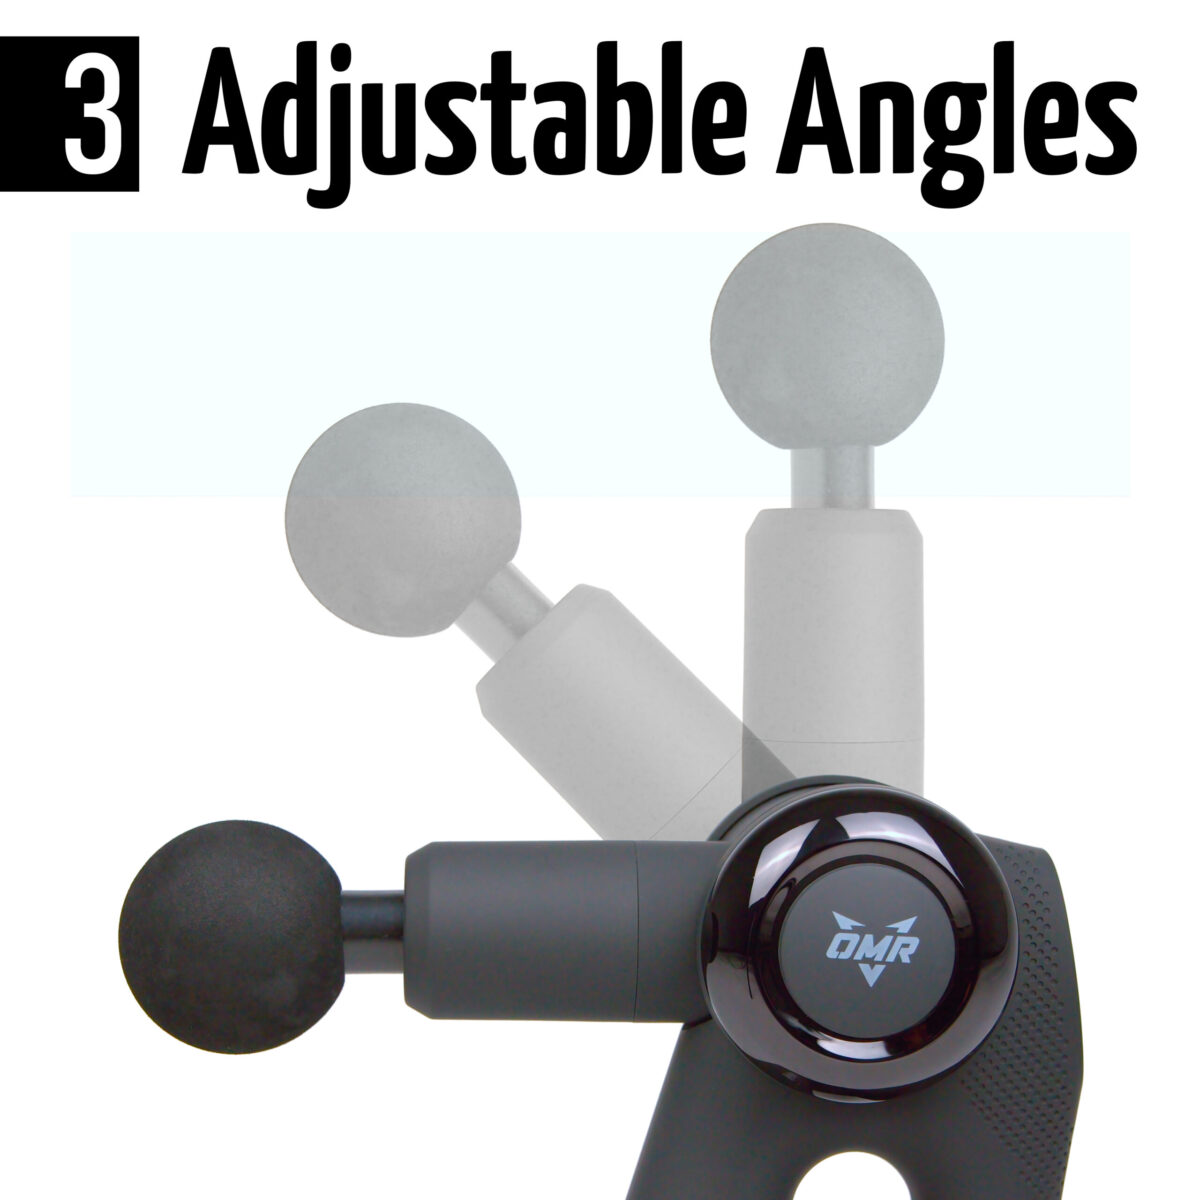 3 Adjustable Angles Massage Gun Elite